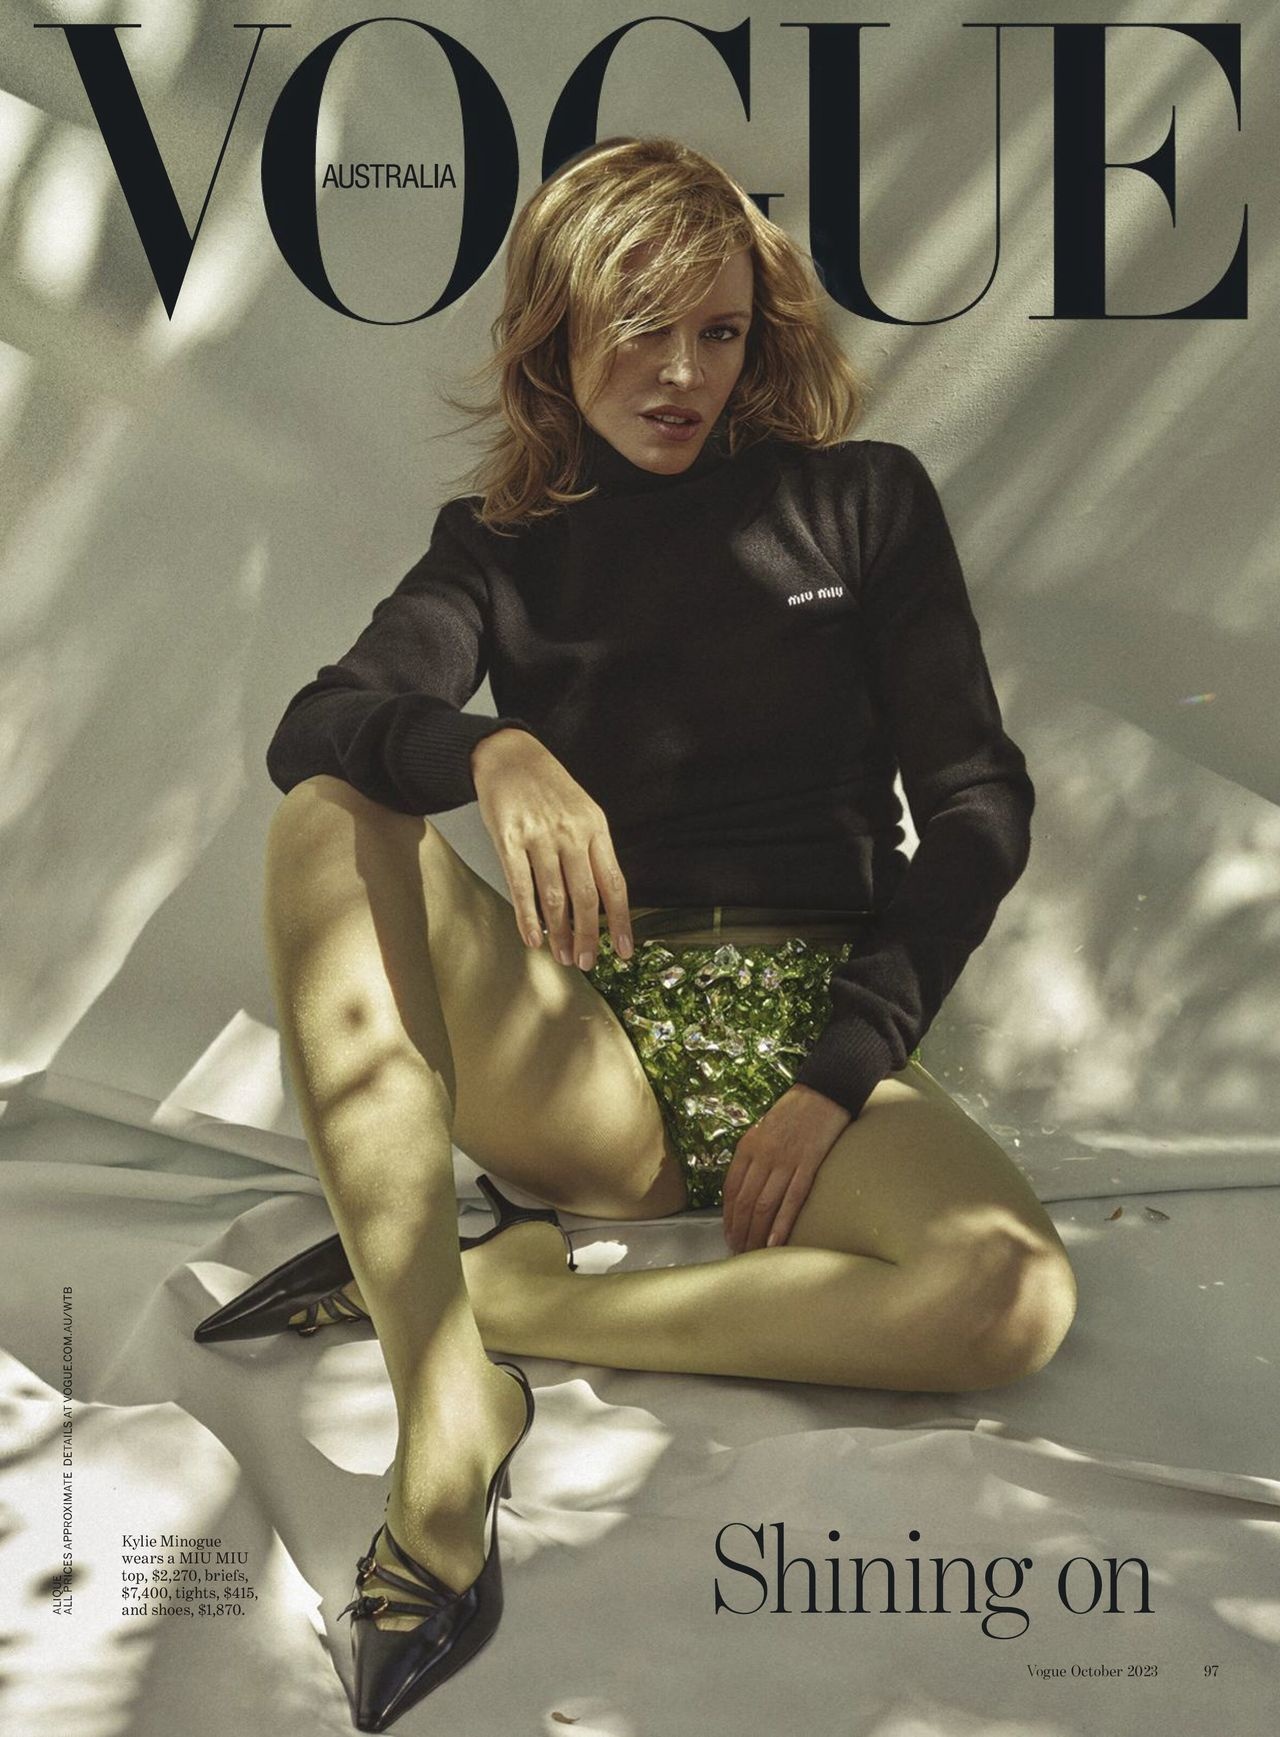 Vogue Cover News, Latest Vogue Cover Updates, Stories & Photos